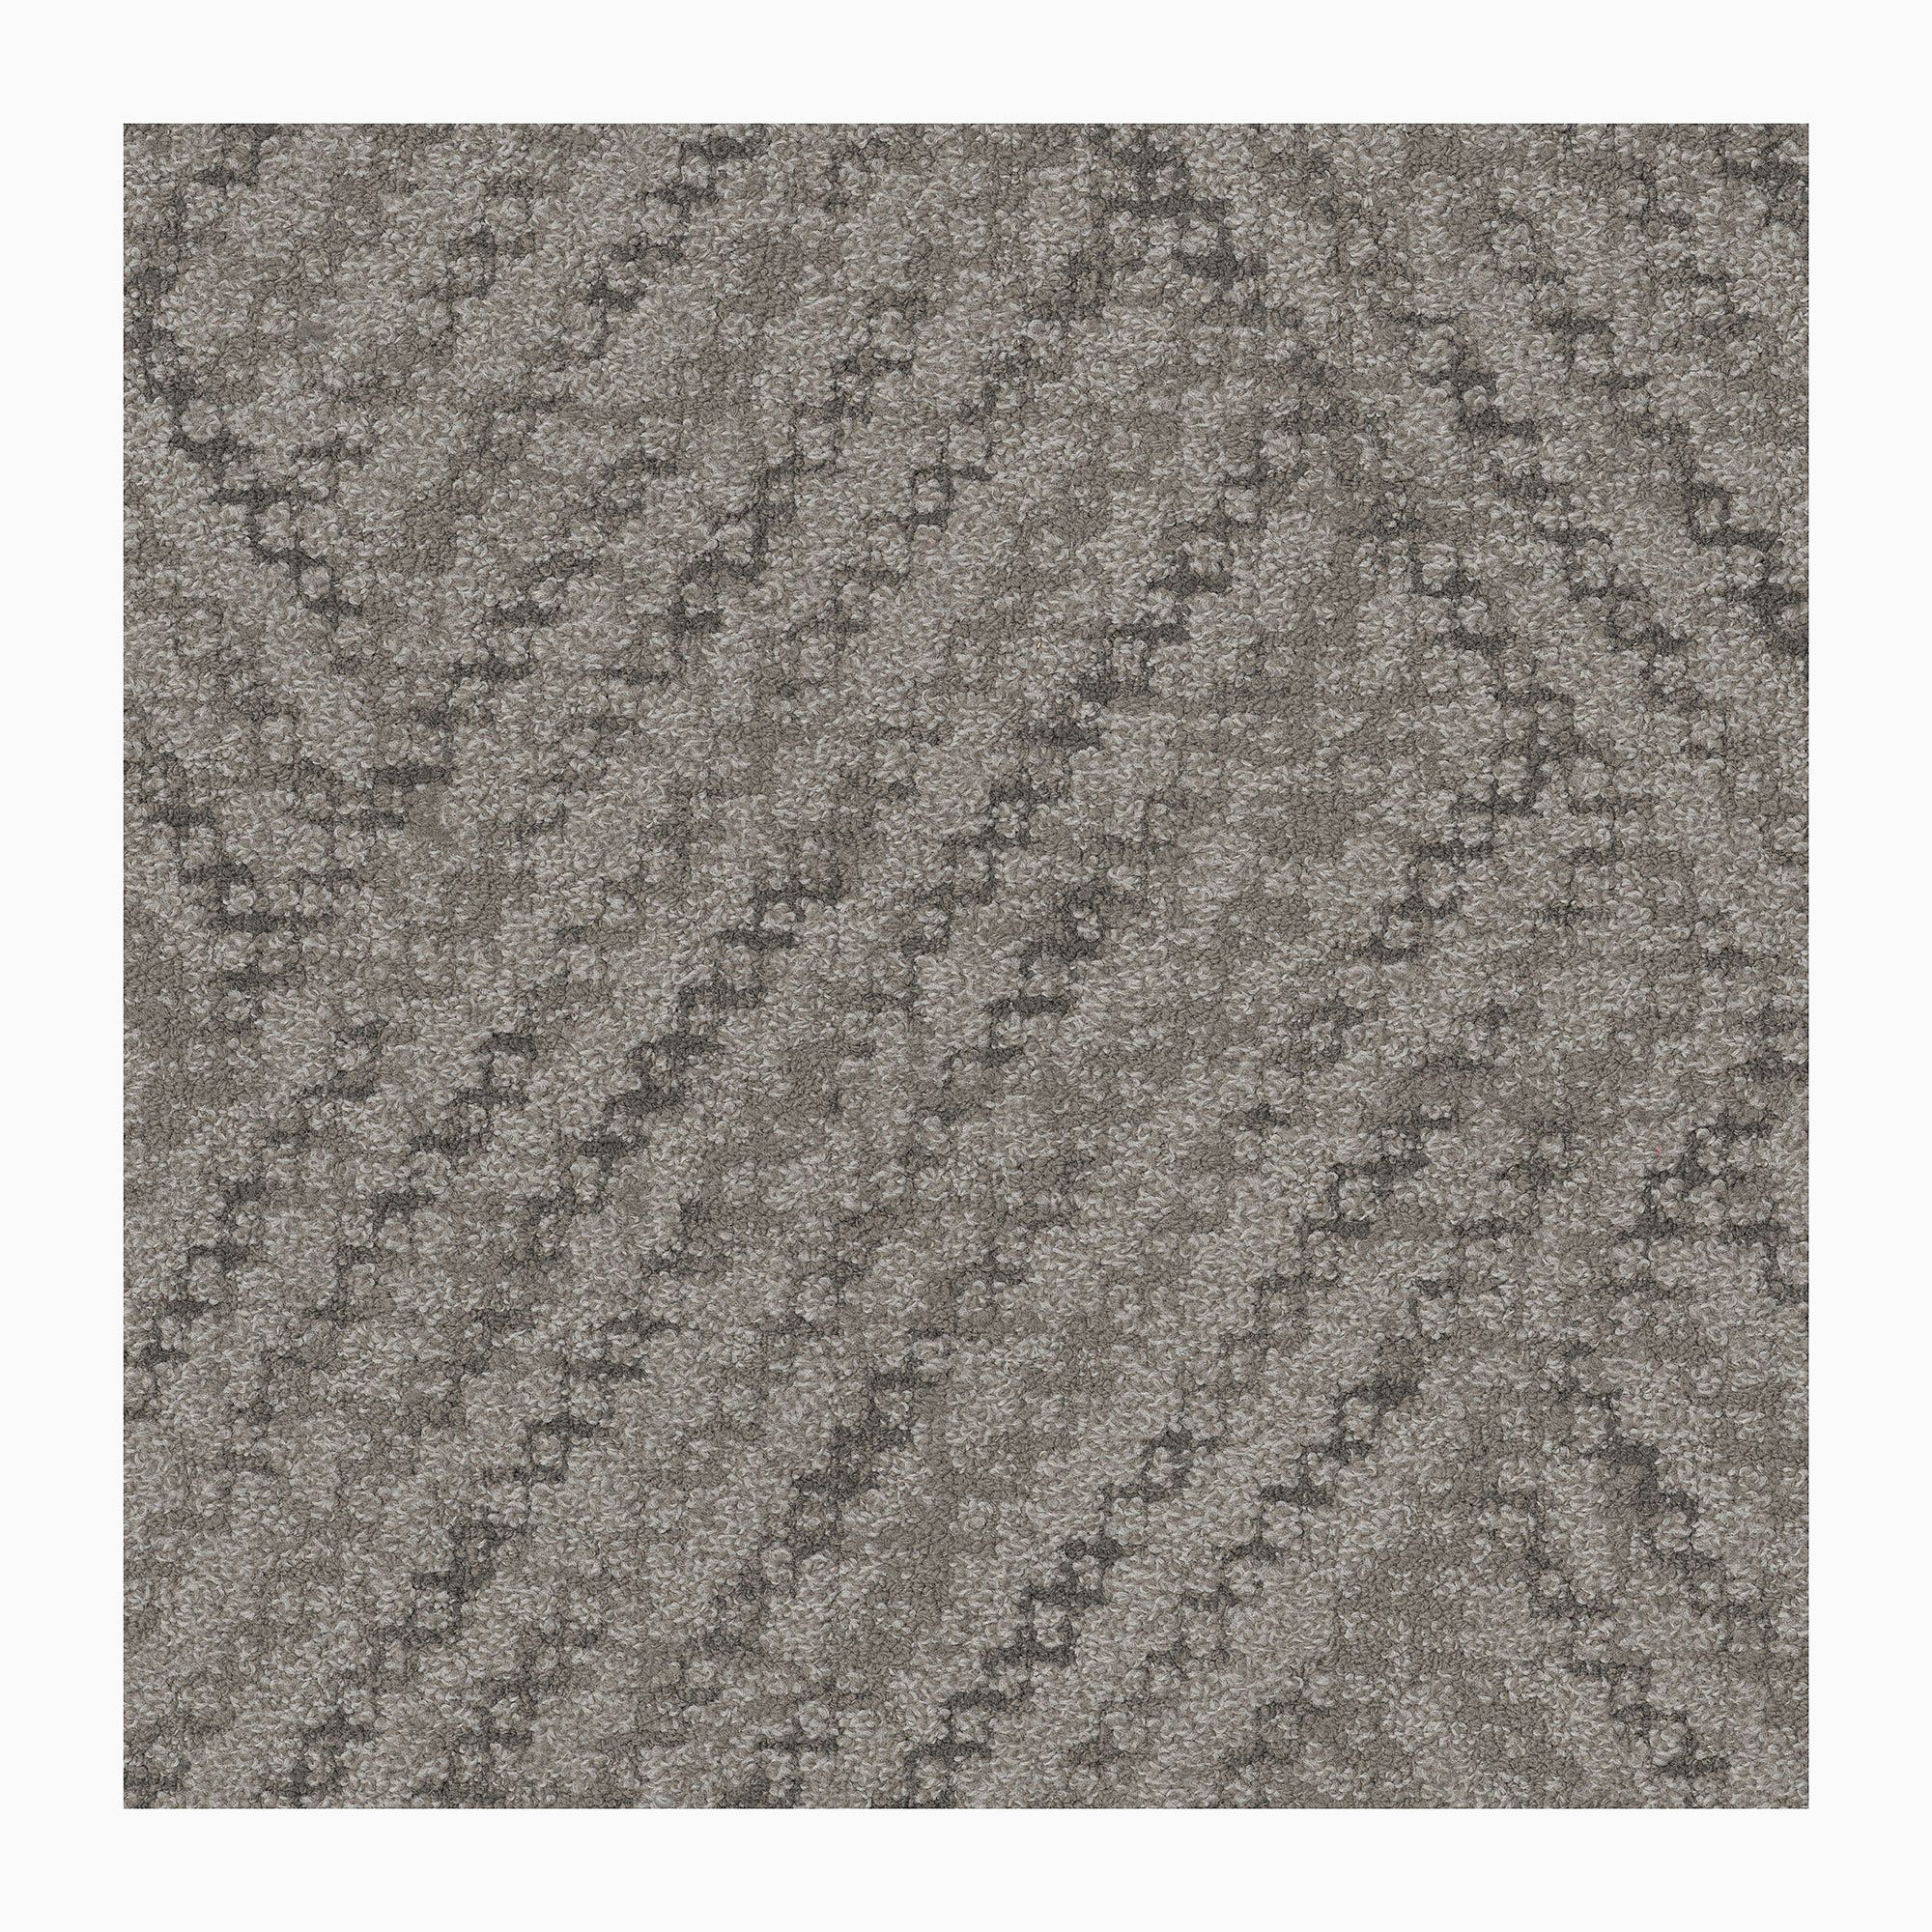 Chisel Carpet Tile by Shaw Contract | West Elm